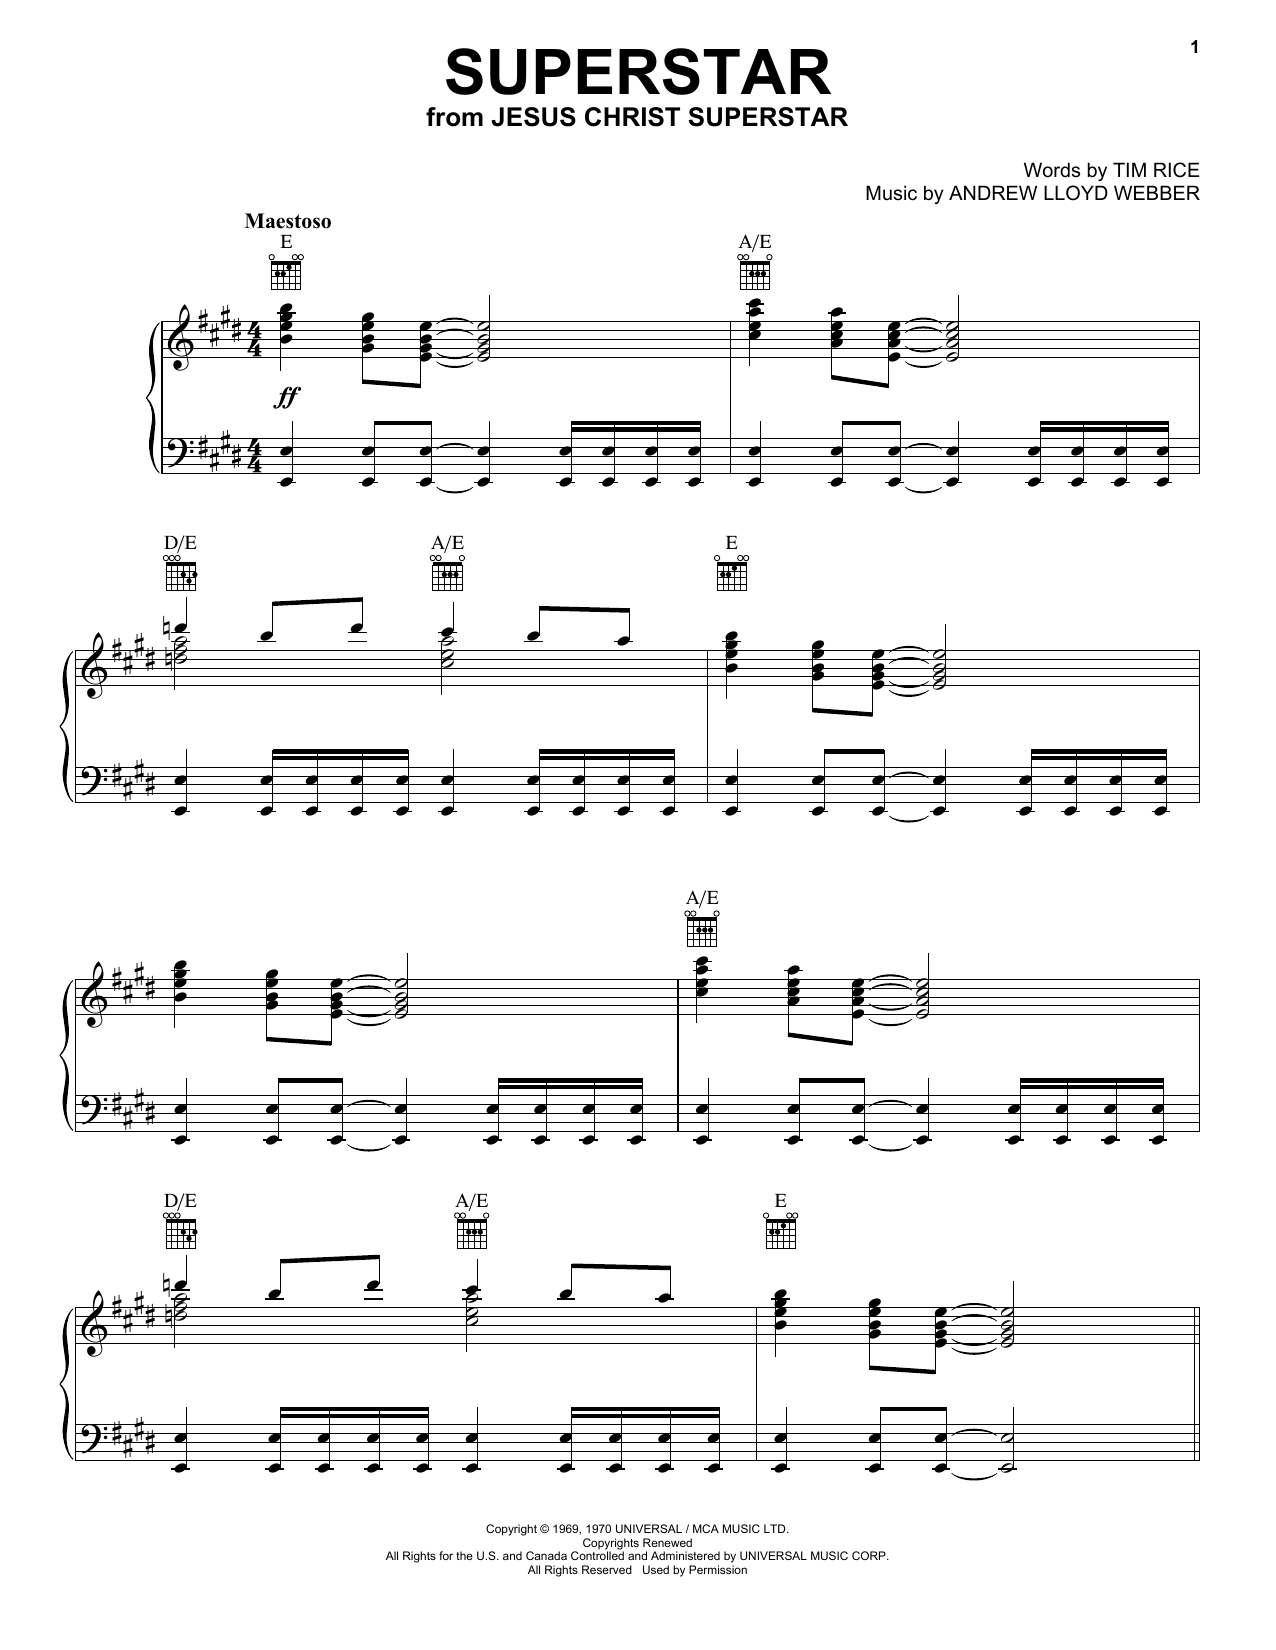 Andrew Lloyd Webber Superstar (from Jesus Christ Superstar) Sheet Music Notes & Chords for Guitar Tab - Download or Print PDF